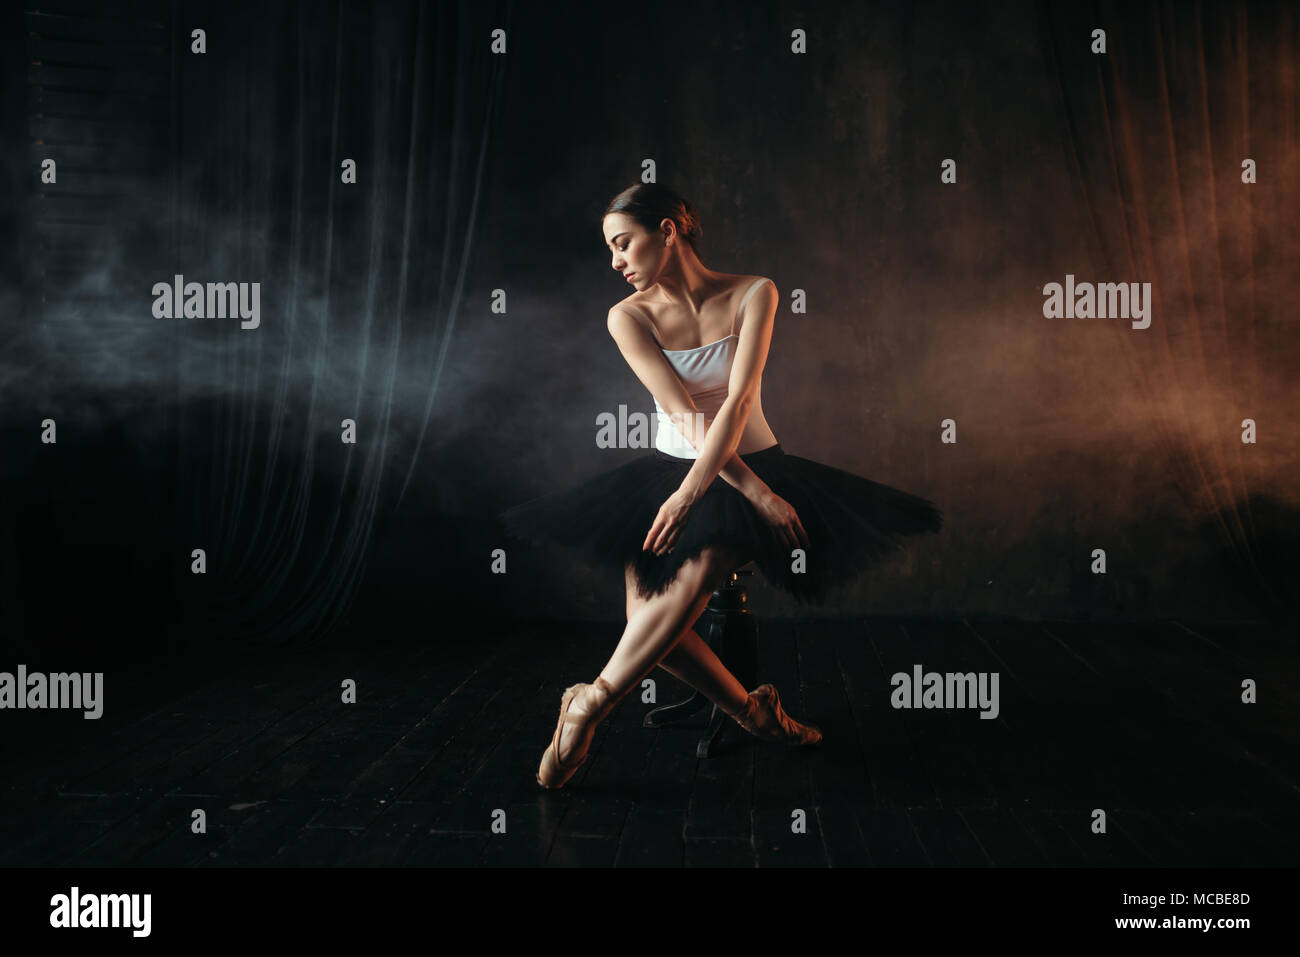 Ballet dancer sitting on black banquette Stock Photo